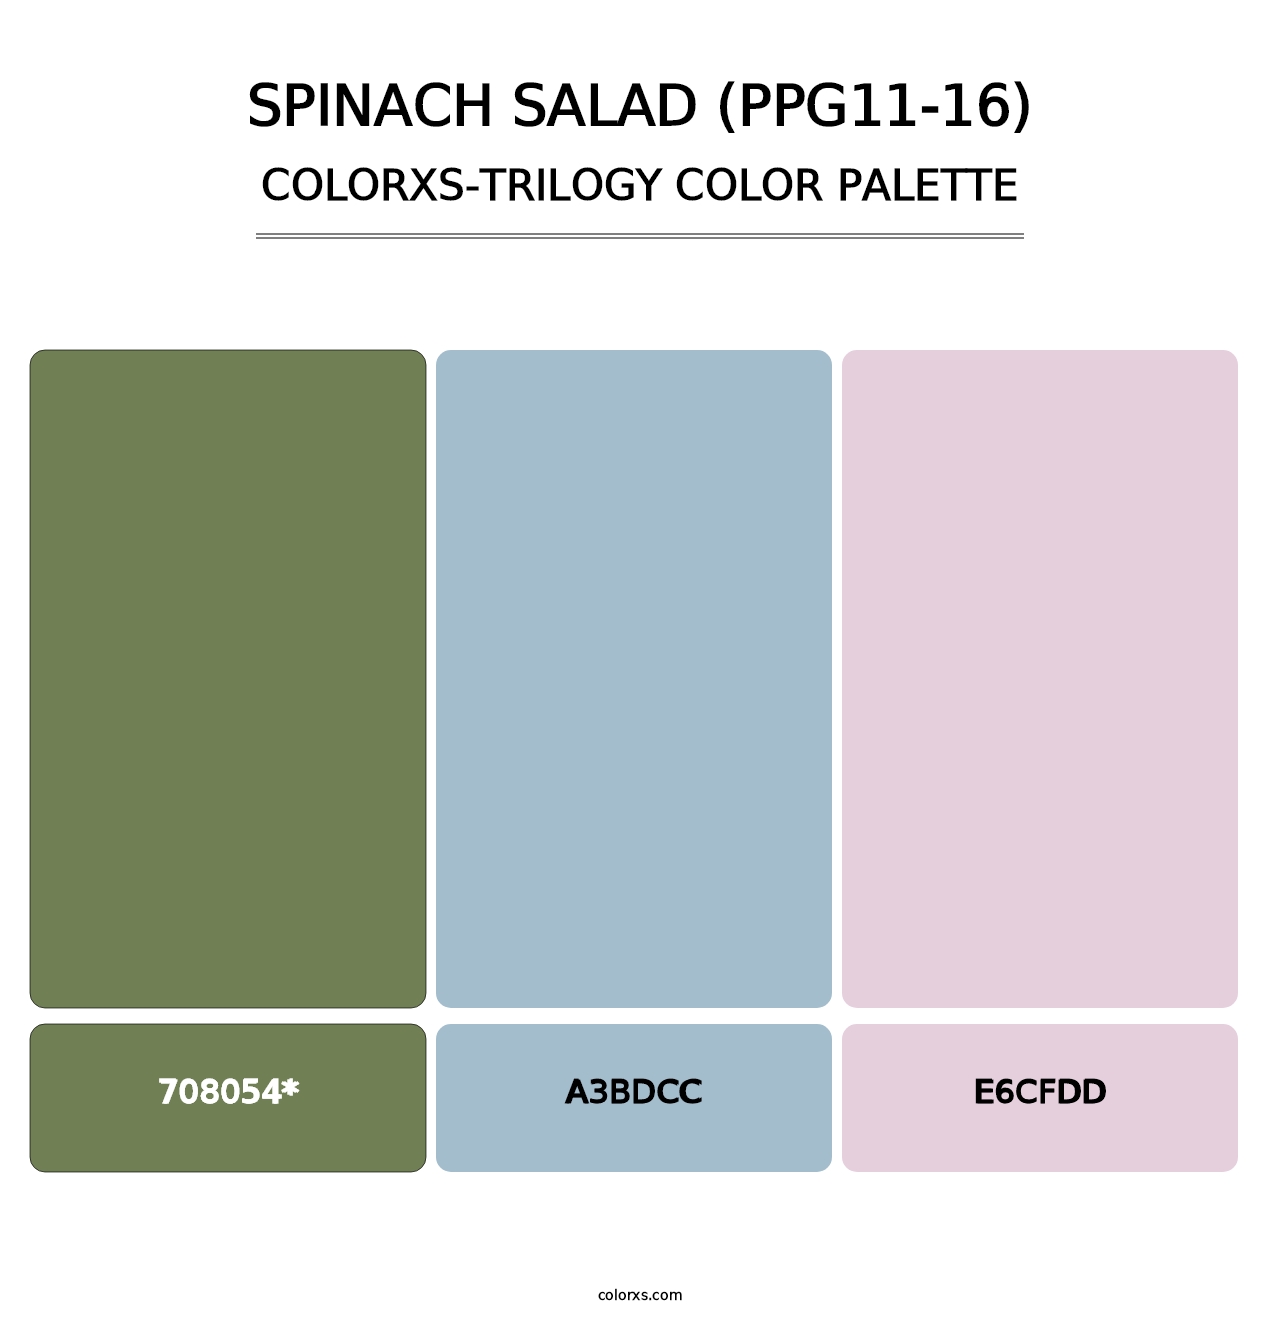 Spinach Salad (PPG11-16) - Colorxs Trilogy Palette